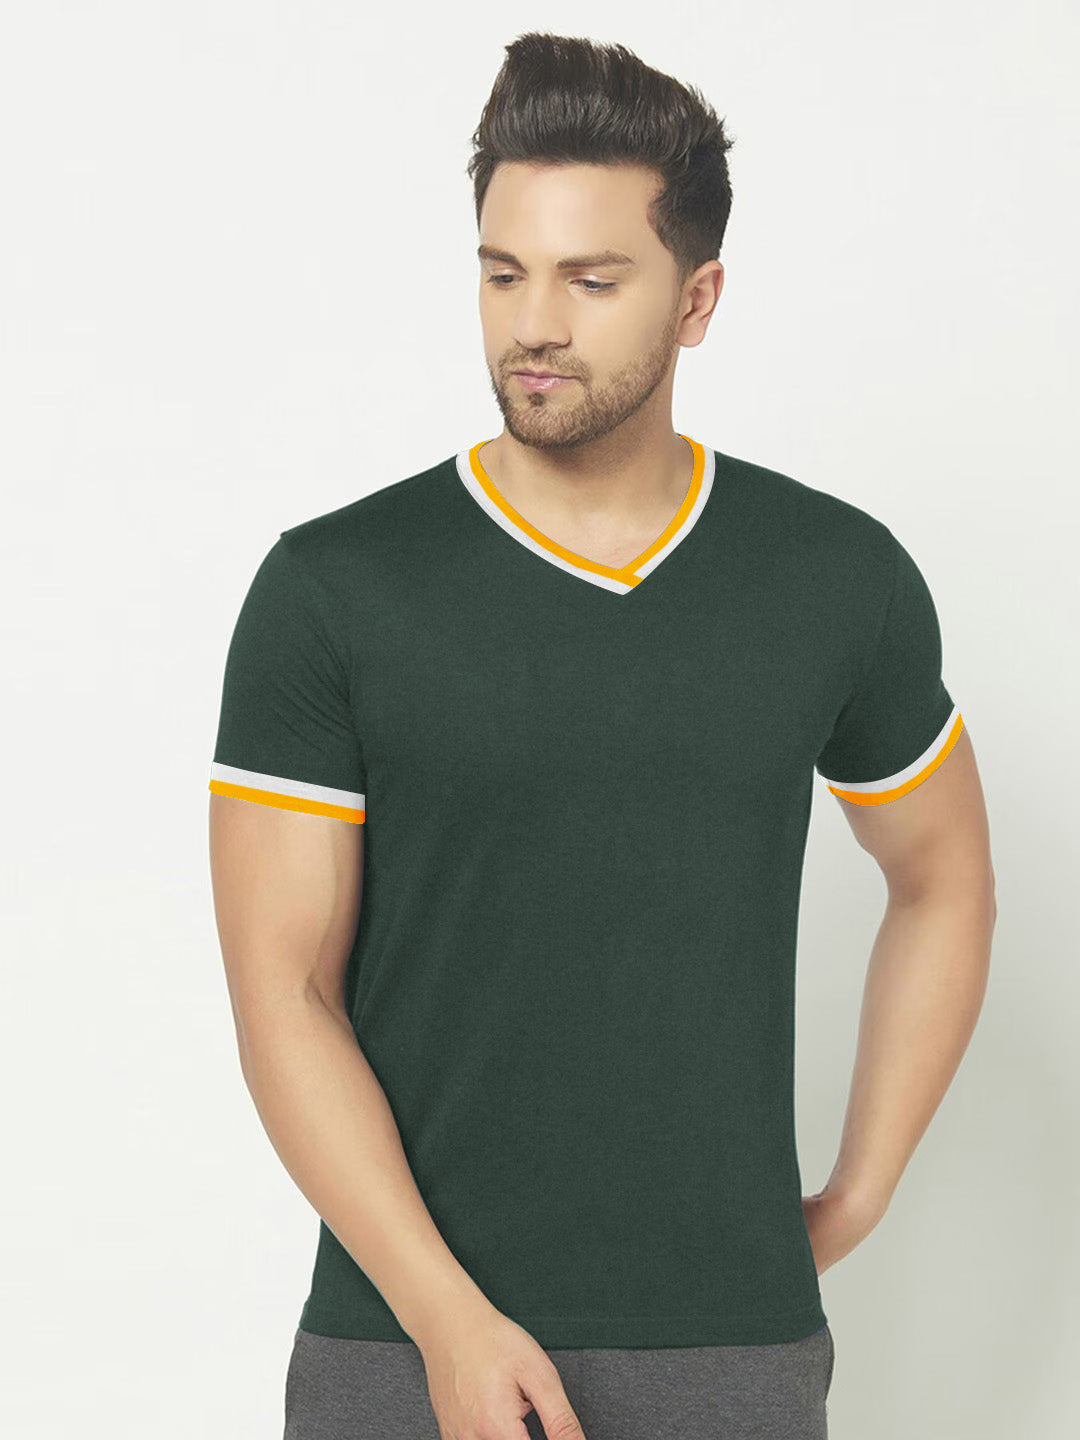 Magestic V Neck Half Sleeve Tee Shirt For Men-Green Melange-BE1123